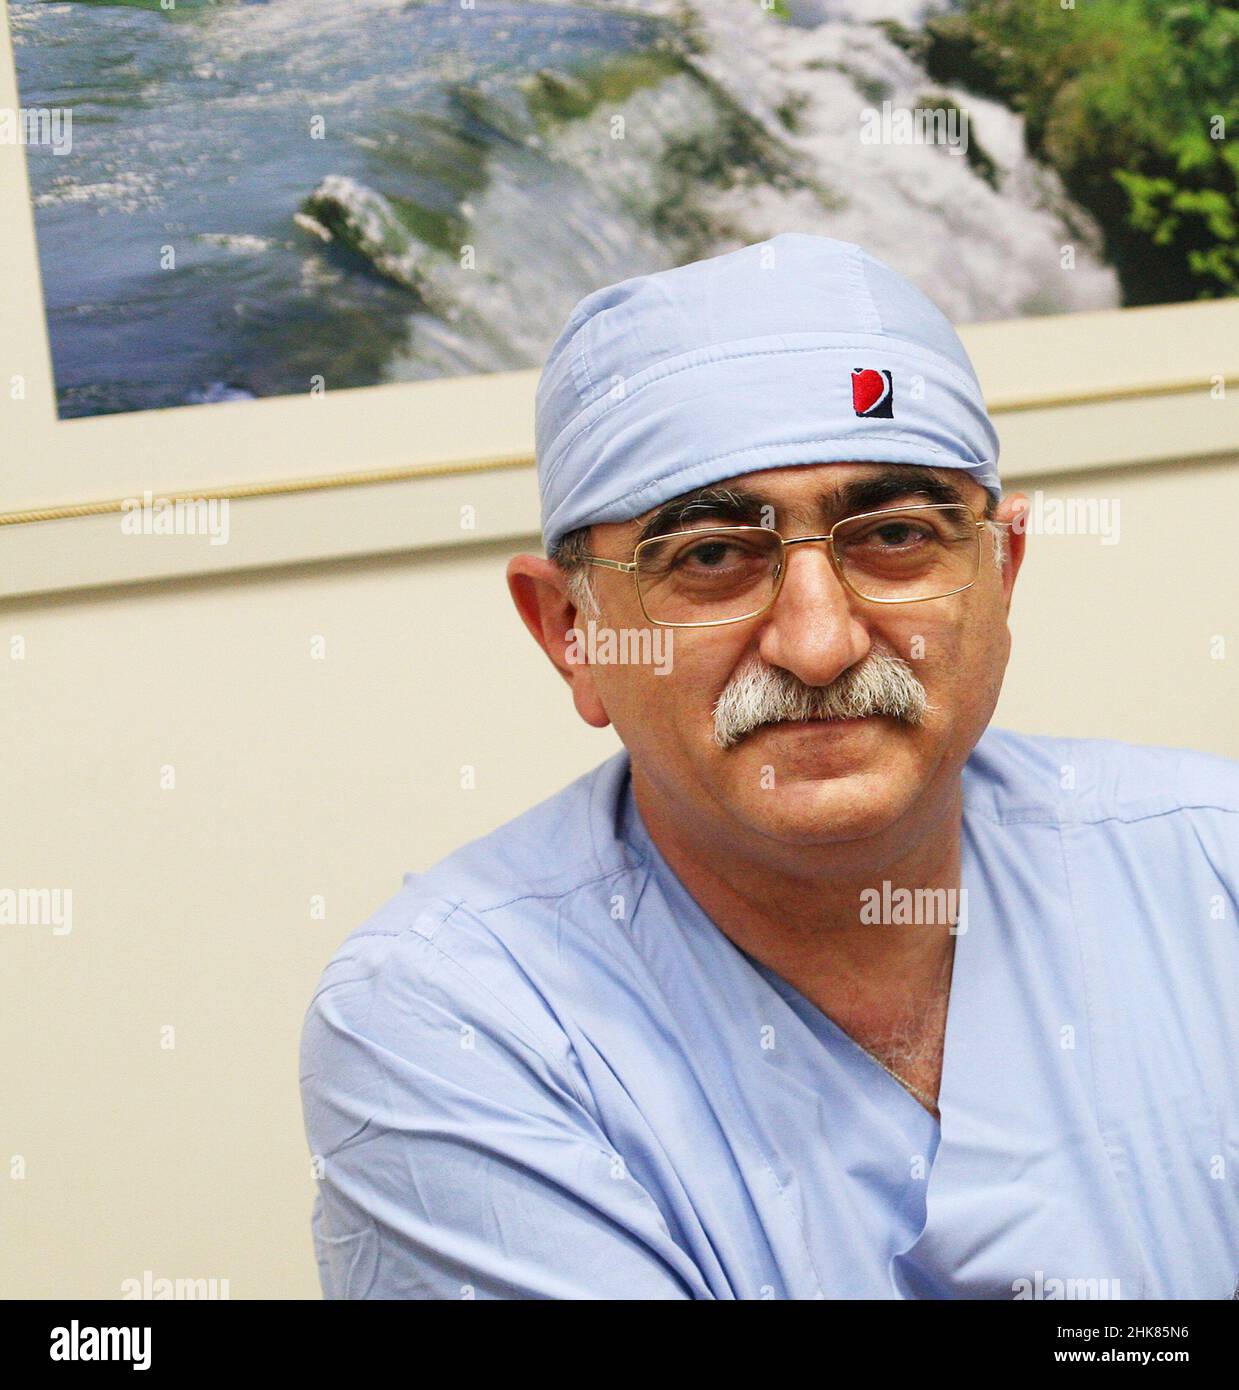 ISTANBUL, TURKEY - JULY 29: Famous Turkish medical doctor, coronary and cardiovascular surgeon Prof. Dr. Bingur Sonmez portrait on July 29, 2010 in Istanbul, Turkey. Stock Photo